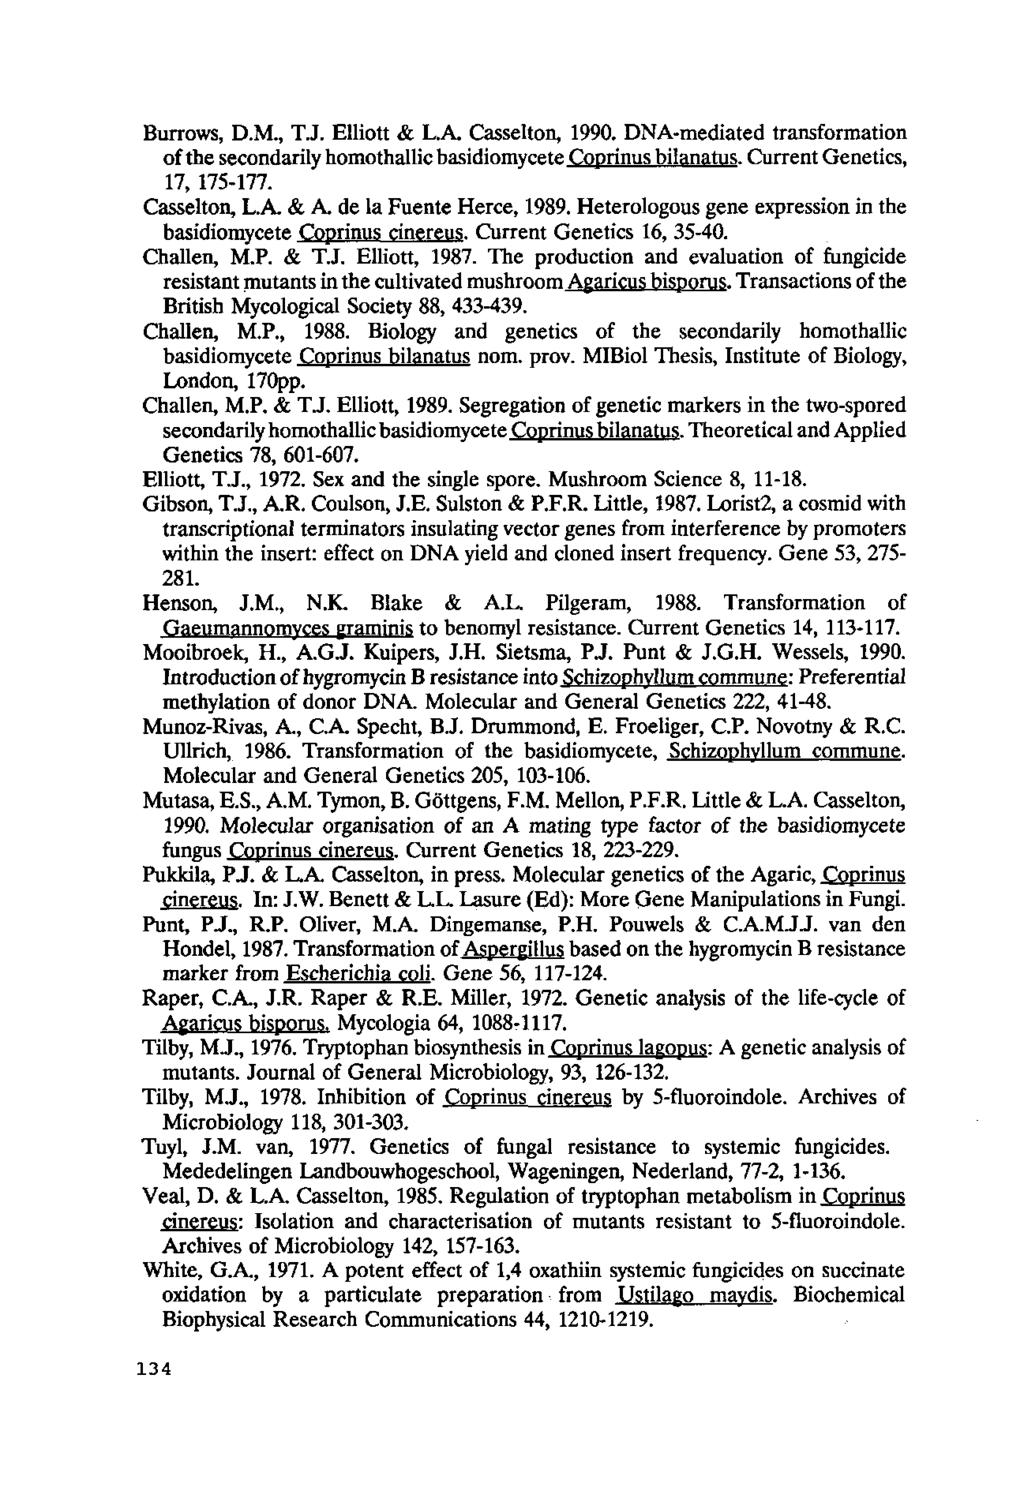 Burrows, D.M., T.J. Elliott & L.A. Casselton, 1990. DNA-mediated transformation of the secondarily homothallic basidiomycete Coprinus bilanatus. Current Genetics, 17, 175-177. Casselton, L.A. & A.